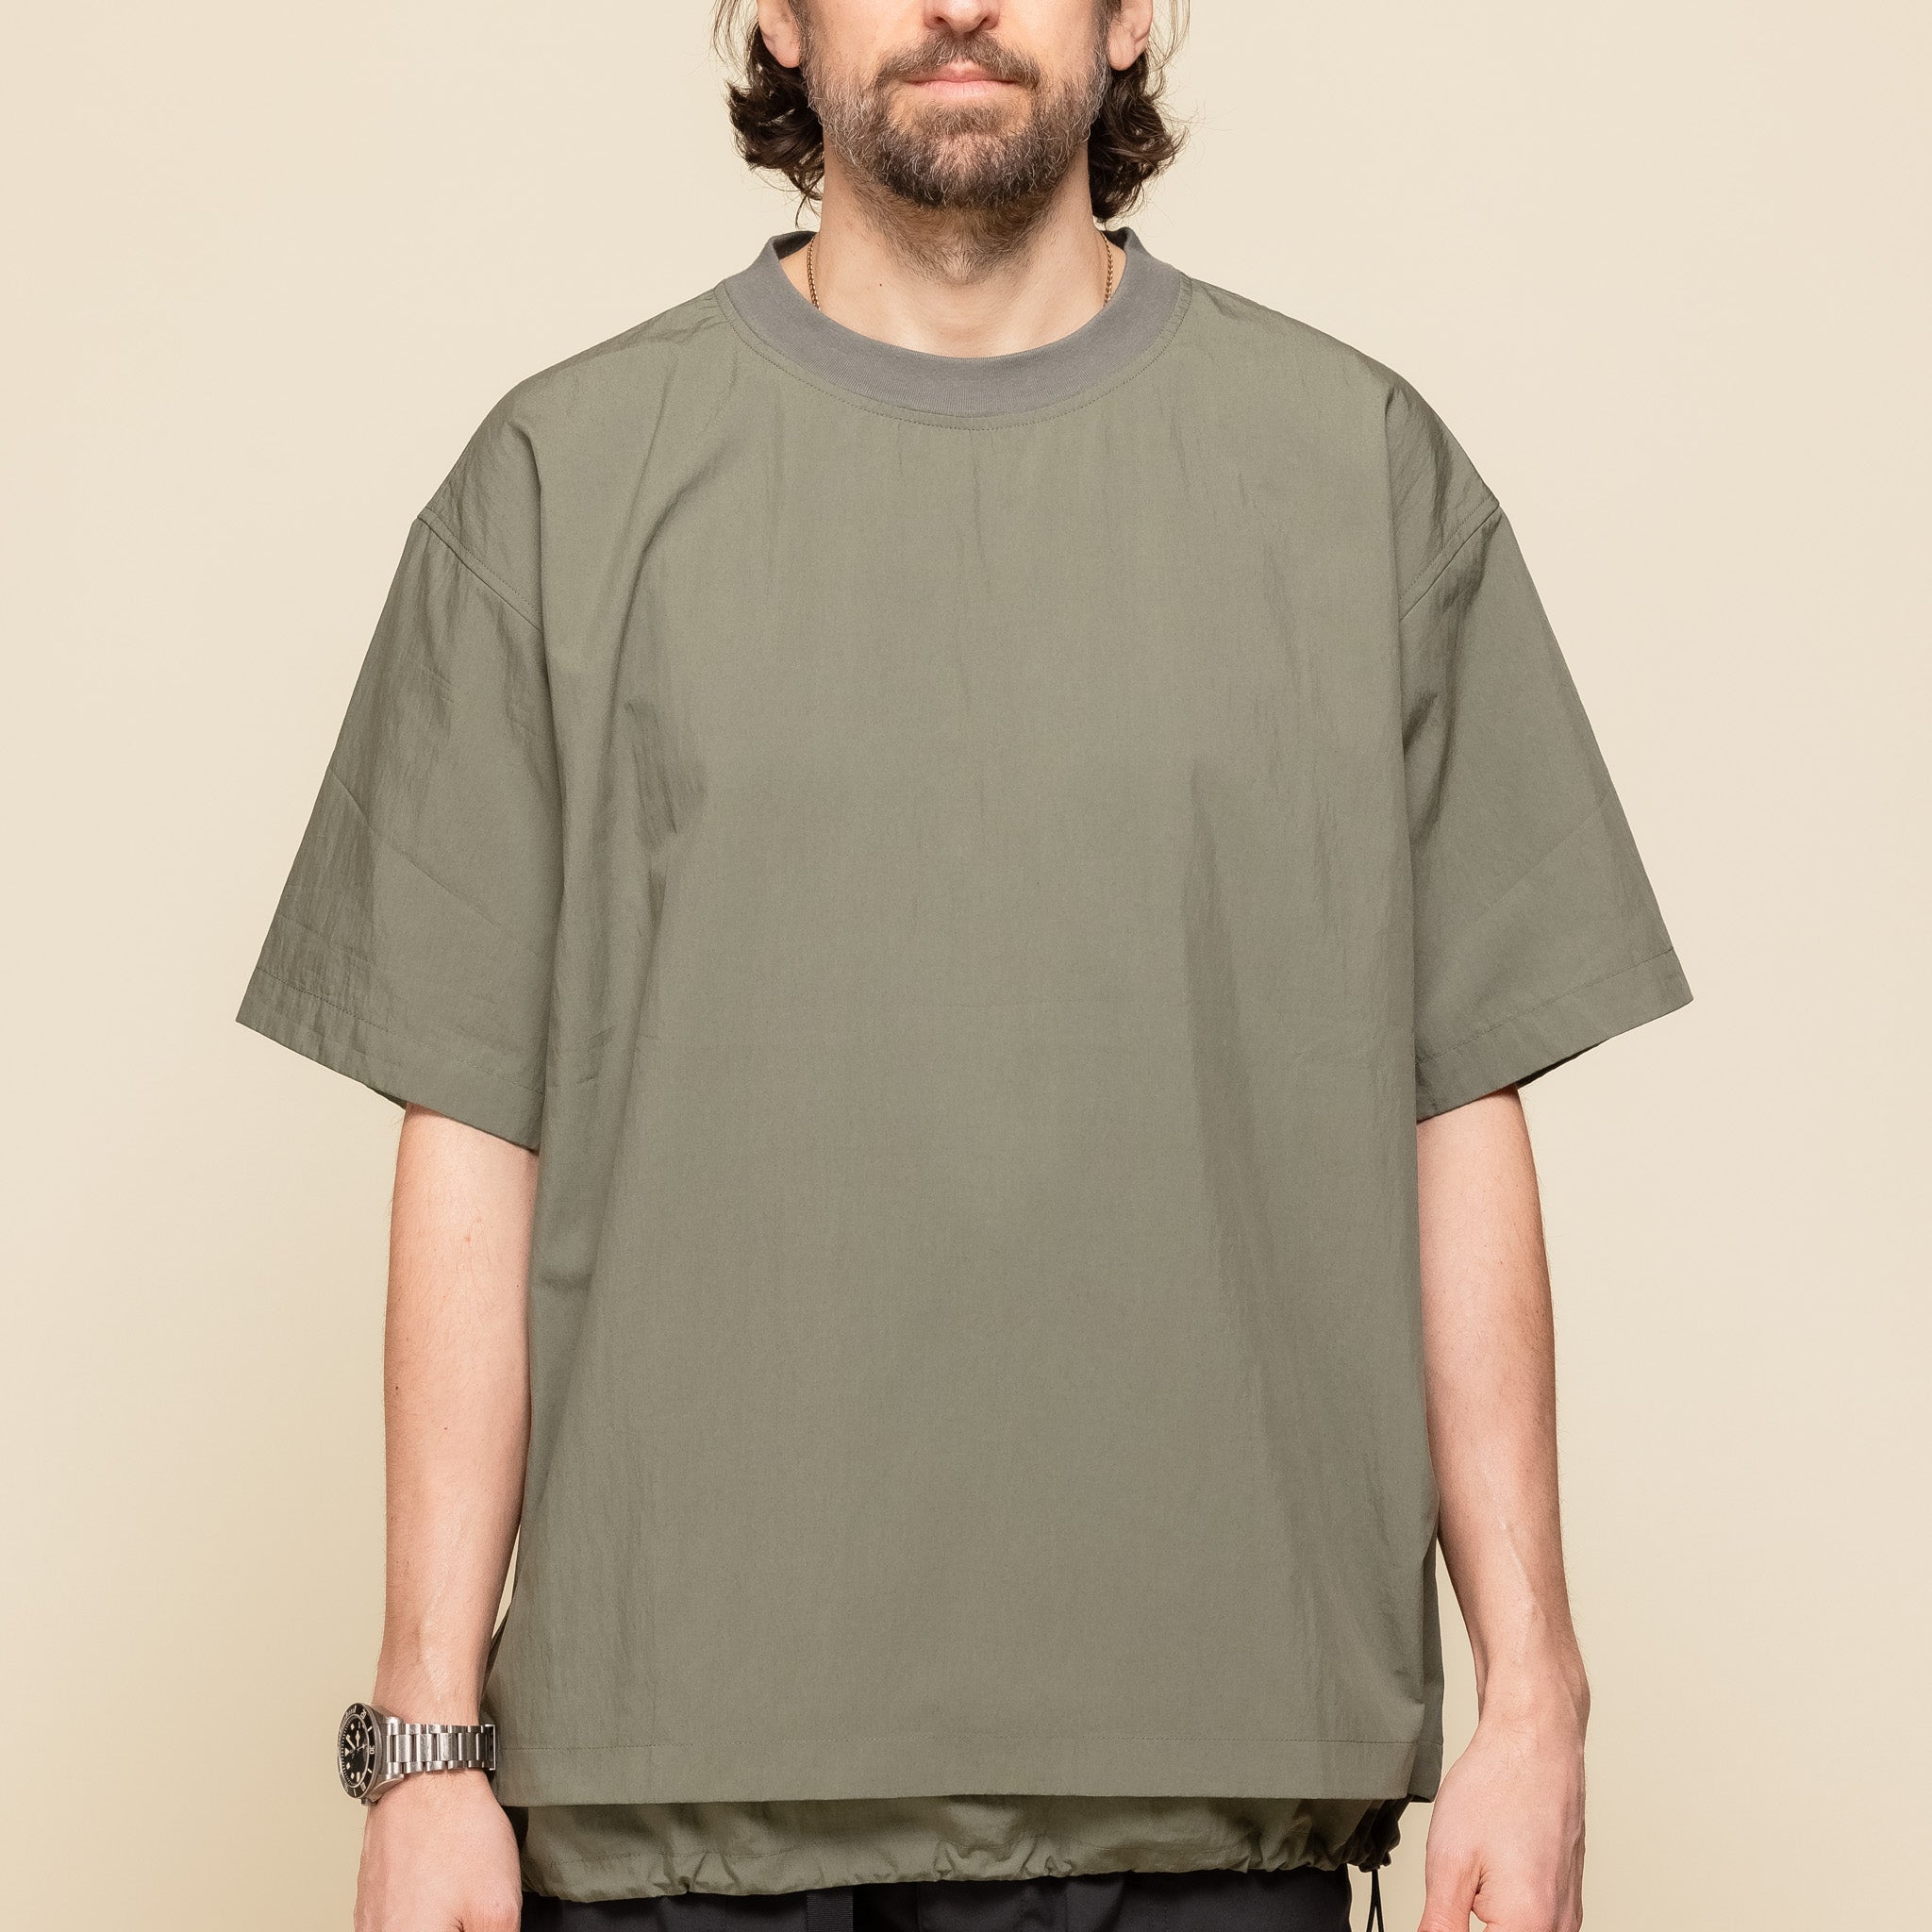 Poliquant - Deformed Windbreaker T-Shirt With Ventilation - Olive "poliquant stockist" "poliquant website" "poliquant t-shirt"